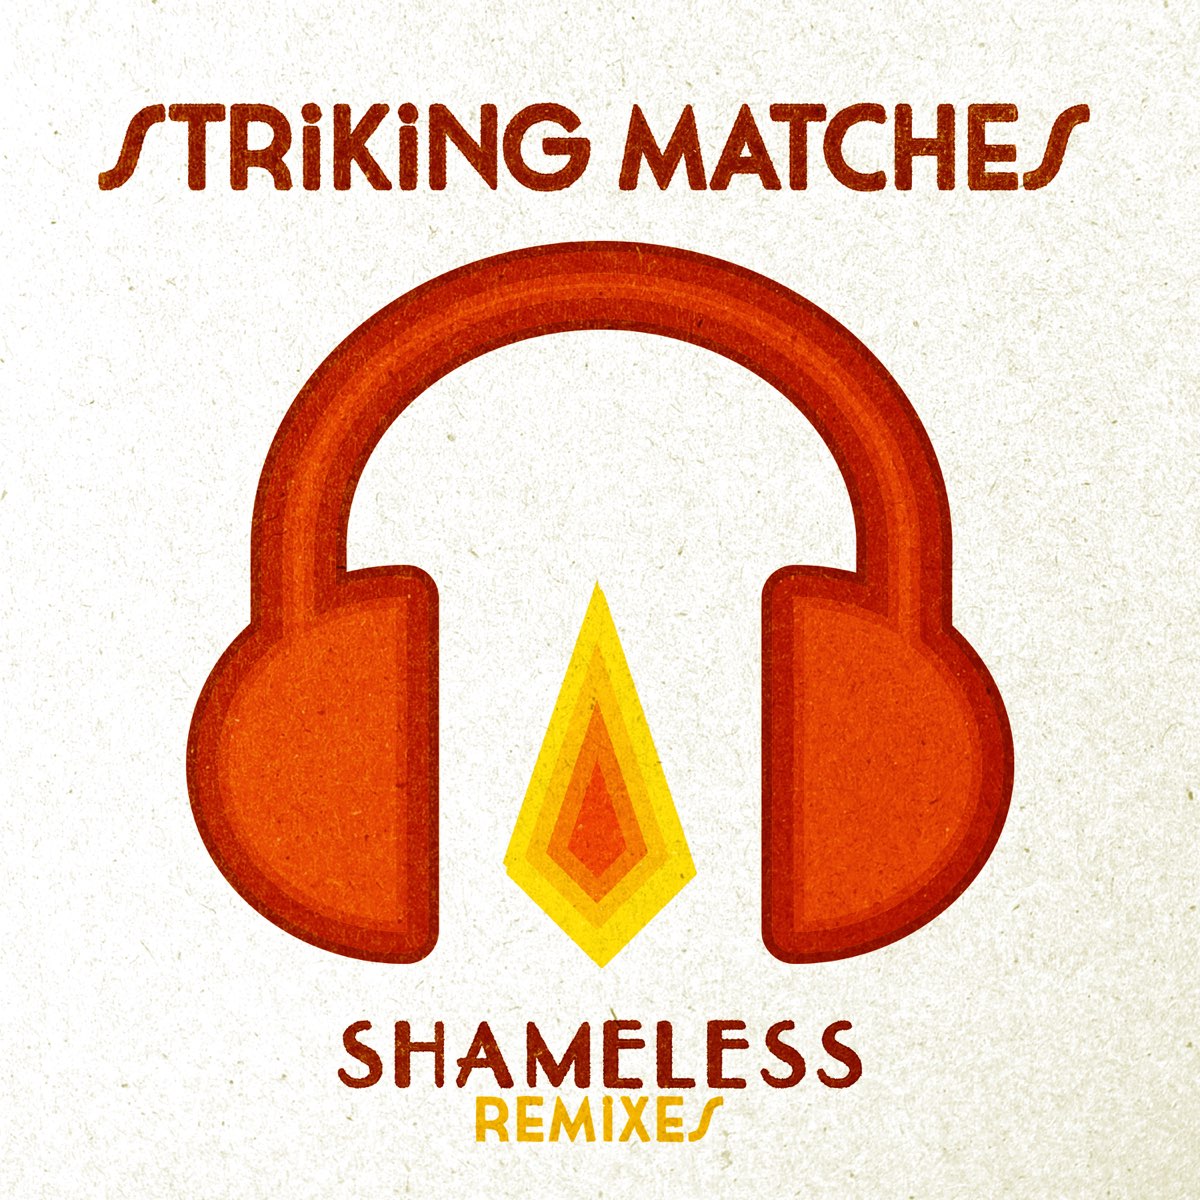 Shameless ремикс. Striking Matches.